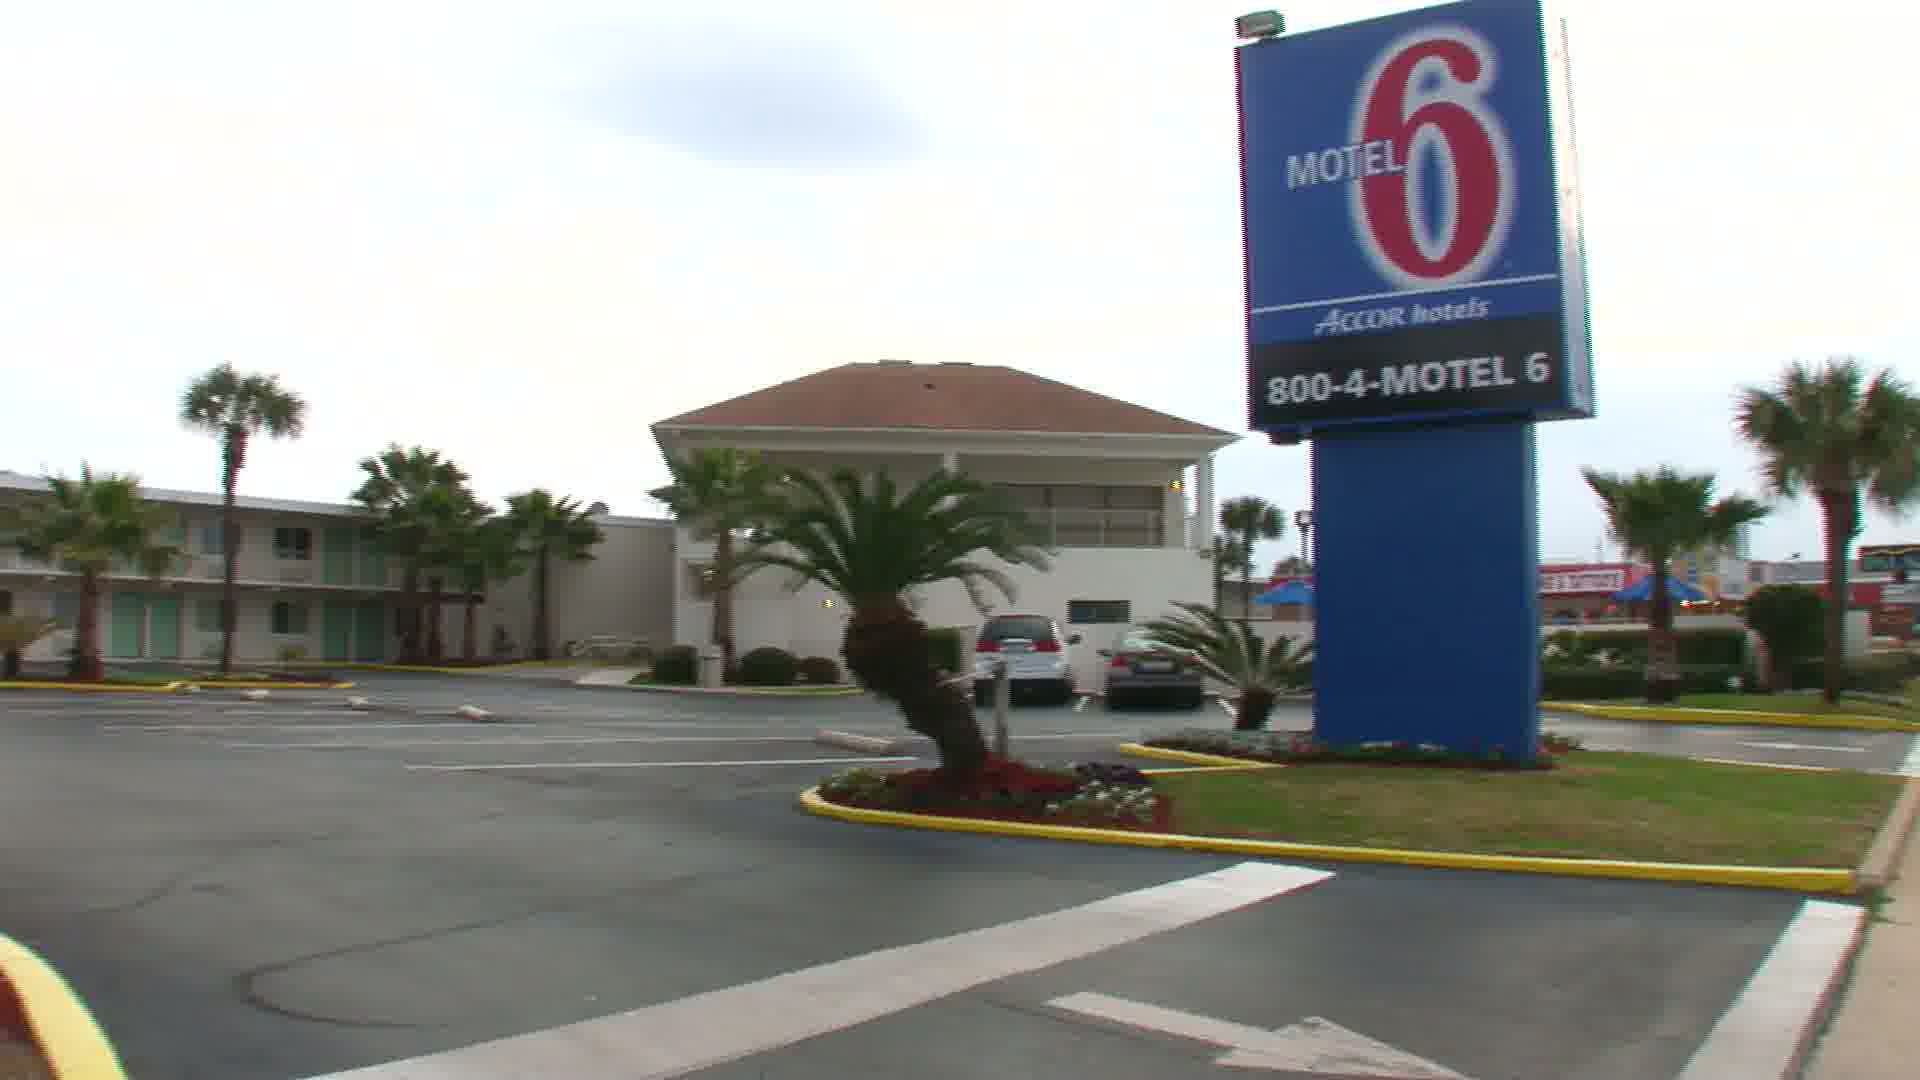 Motels in Destin Florida - Destin Florida AttractionsDestin Florida